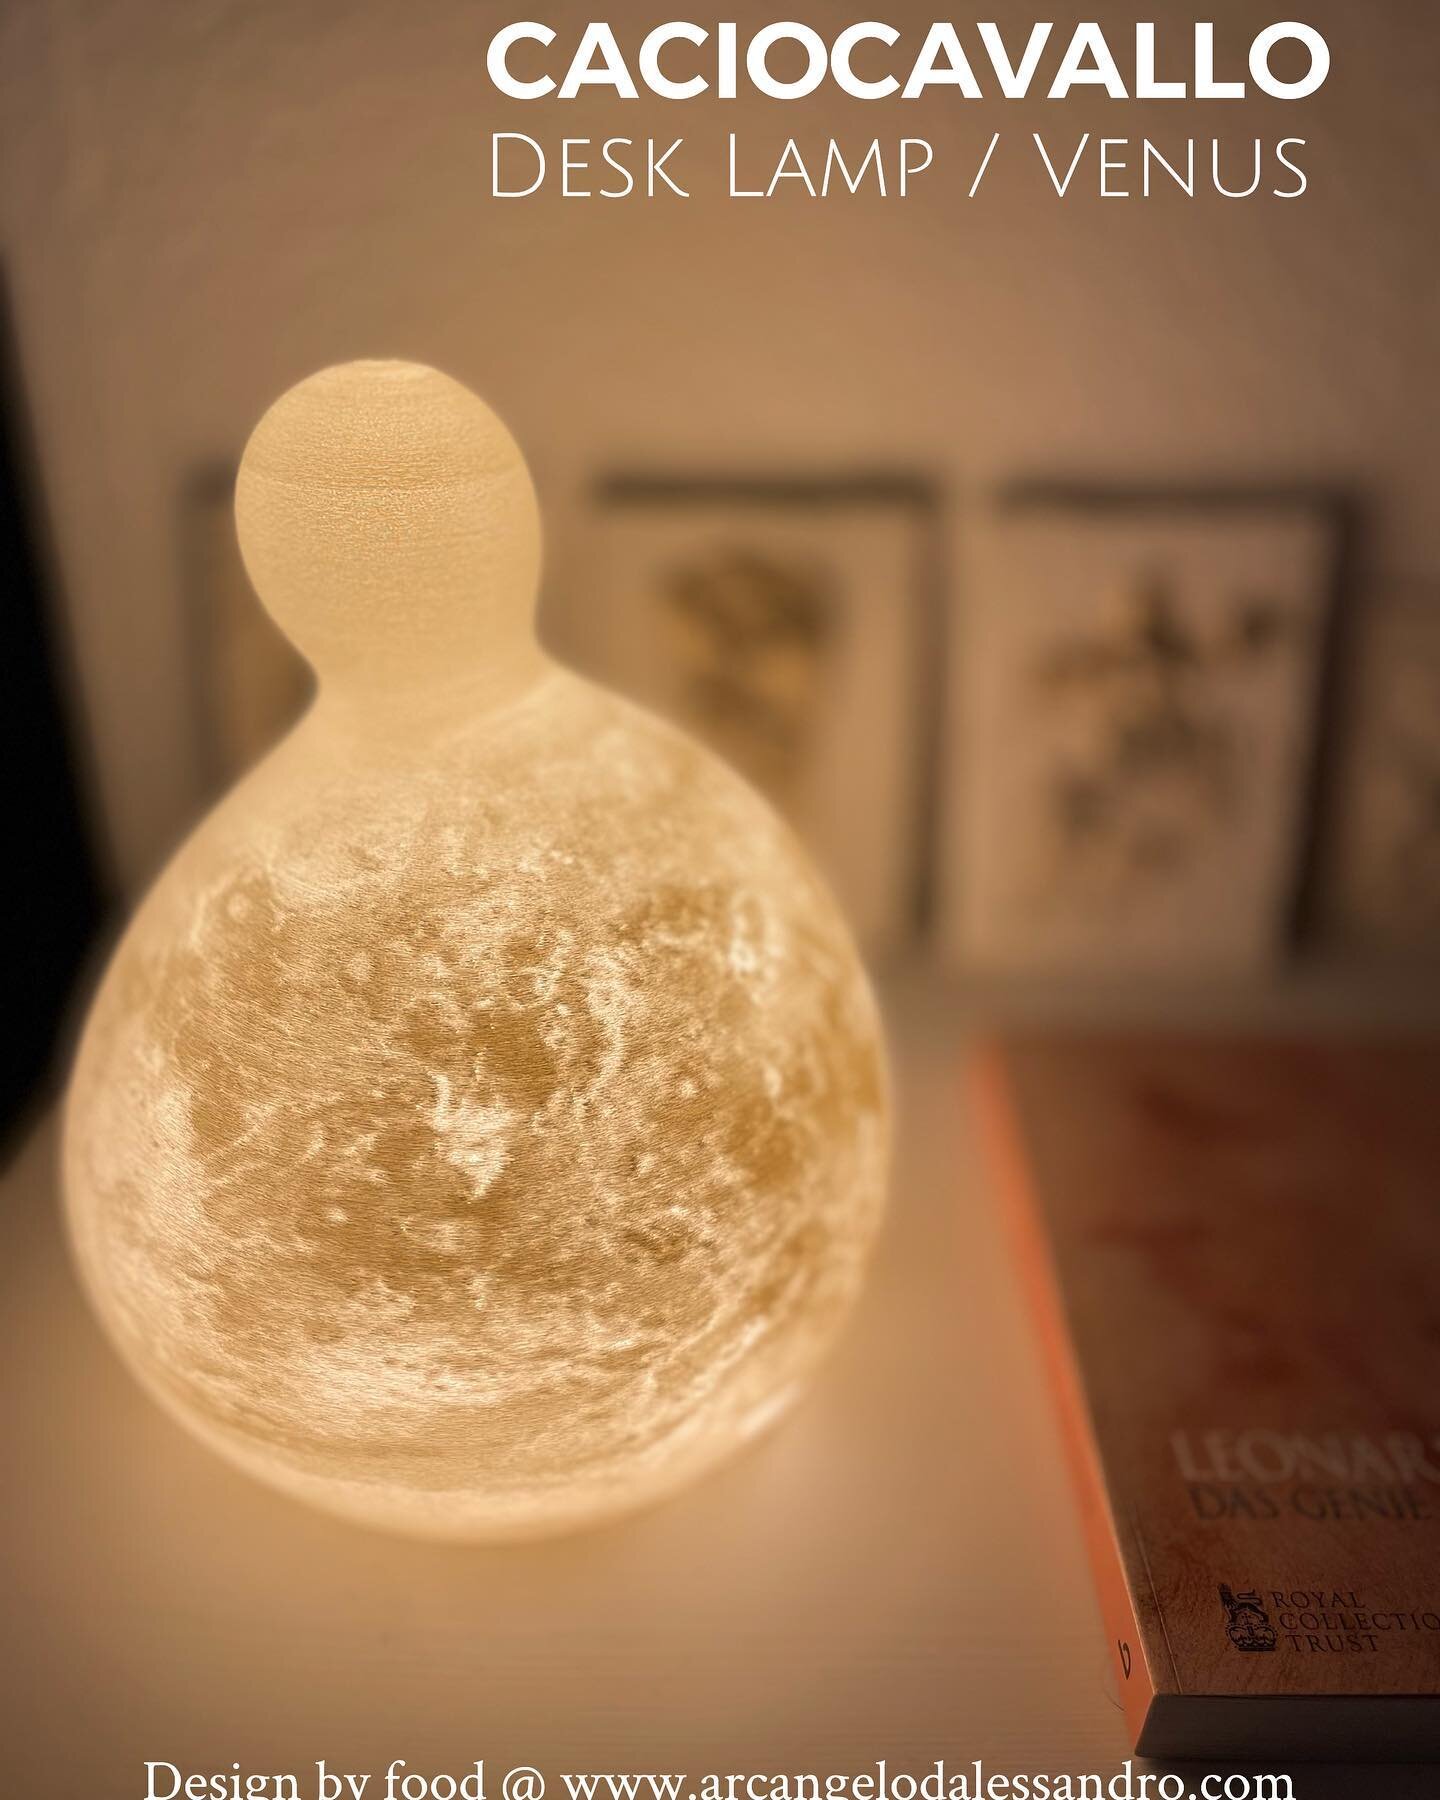 #lamp #design #designlamp #uniquedesign #desklamp #3dprinteddesign #luxurydesign #lifestyle #computationaldesign @arcangelodesign